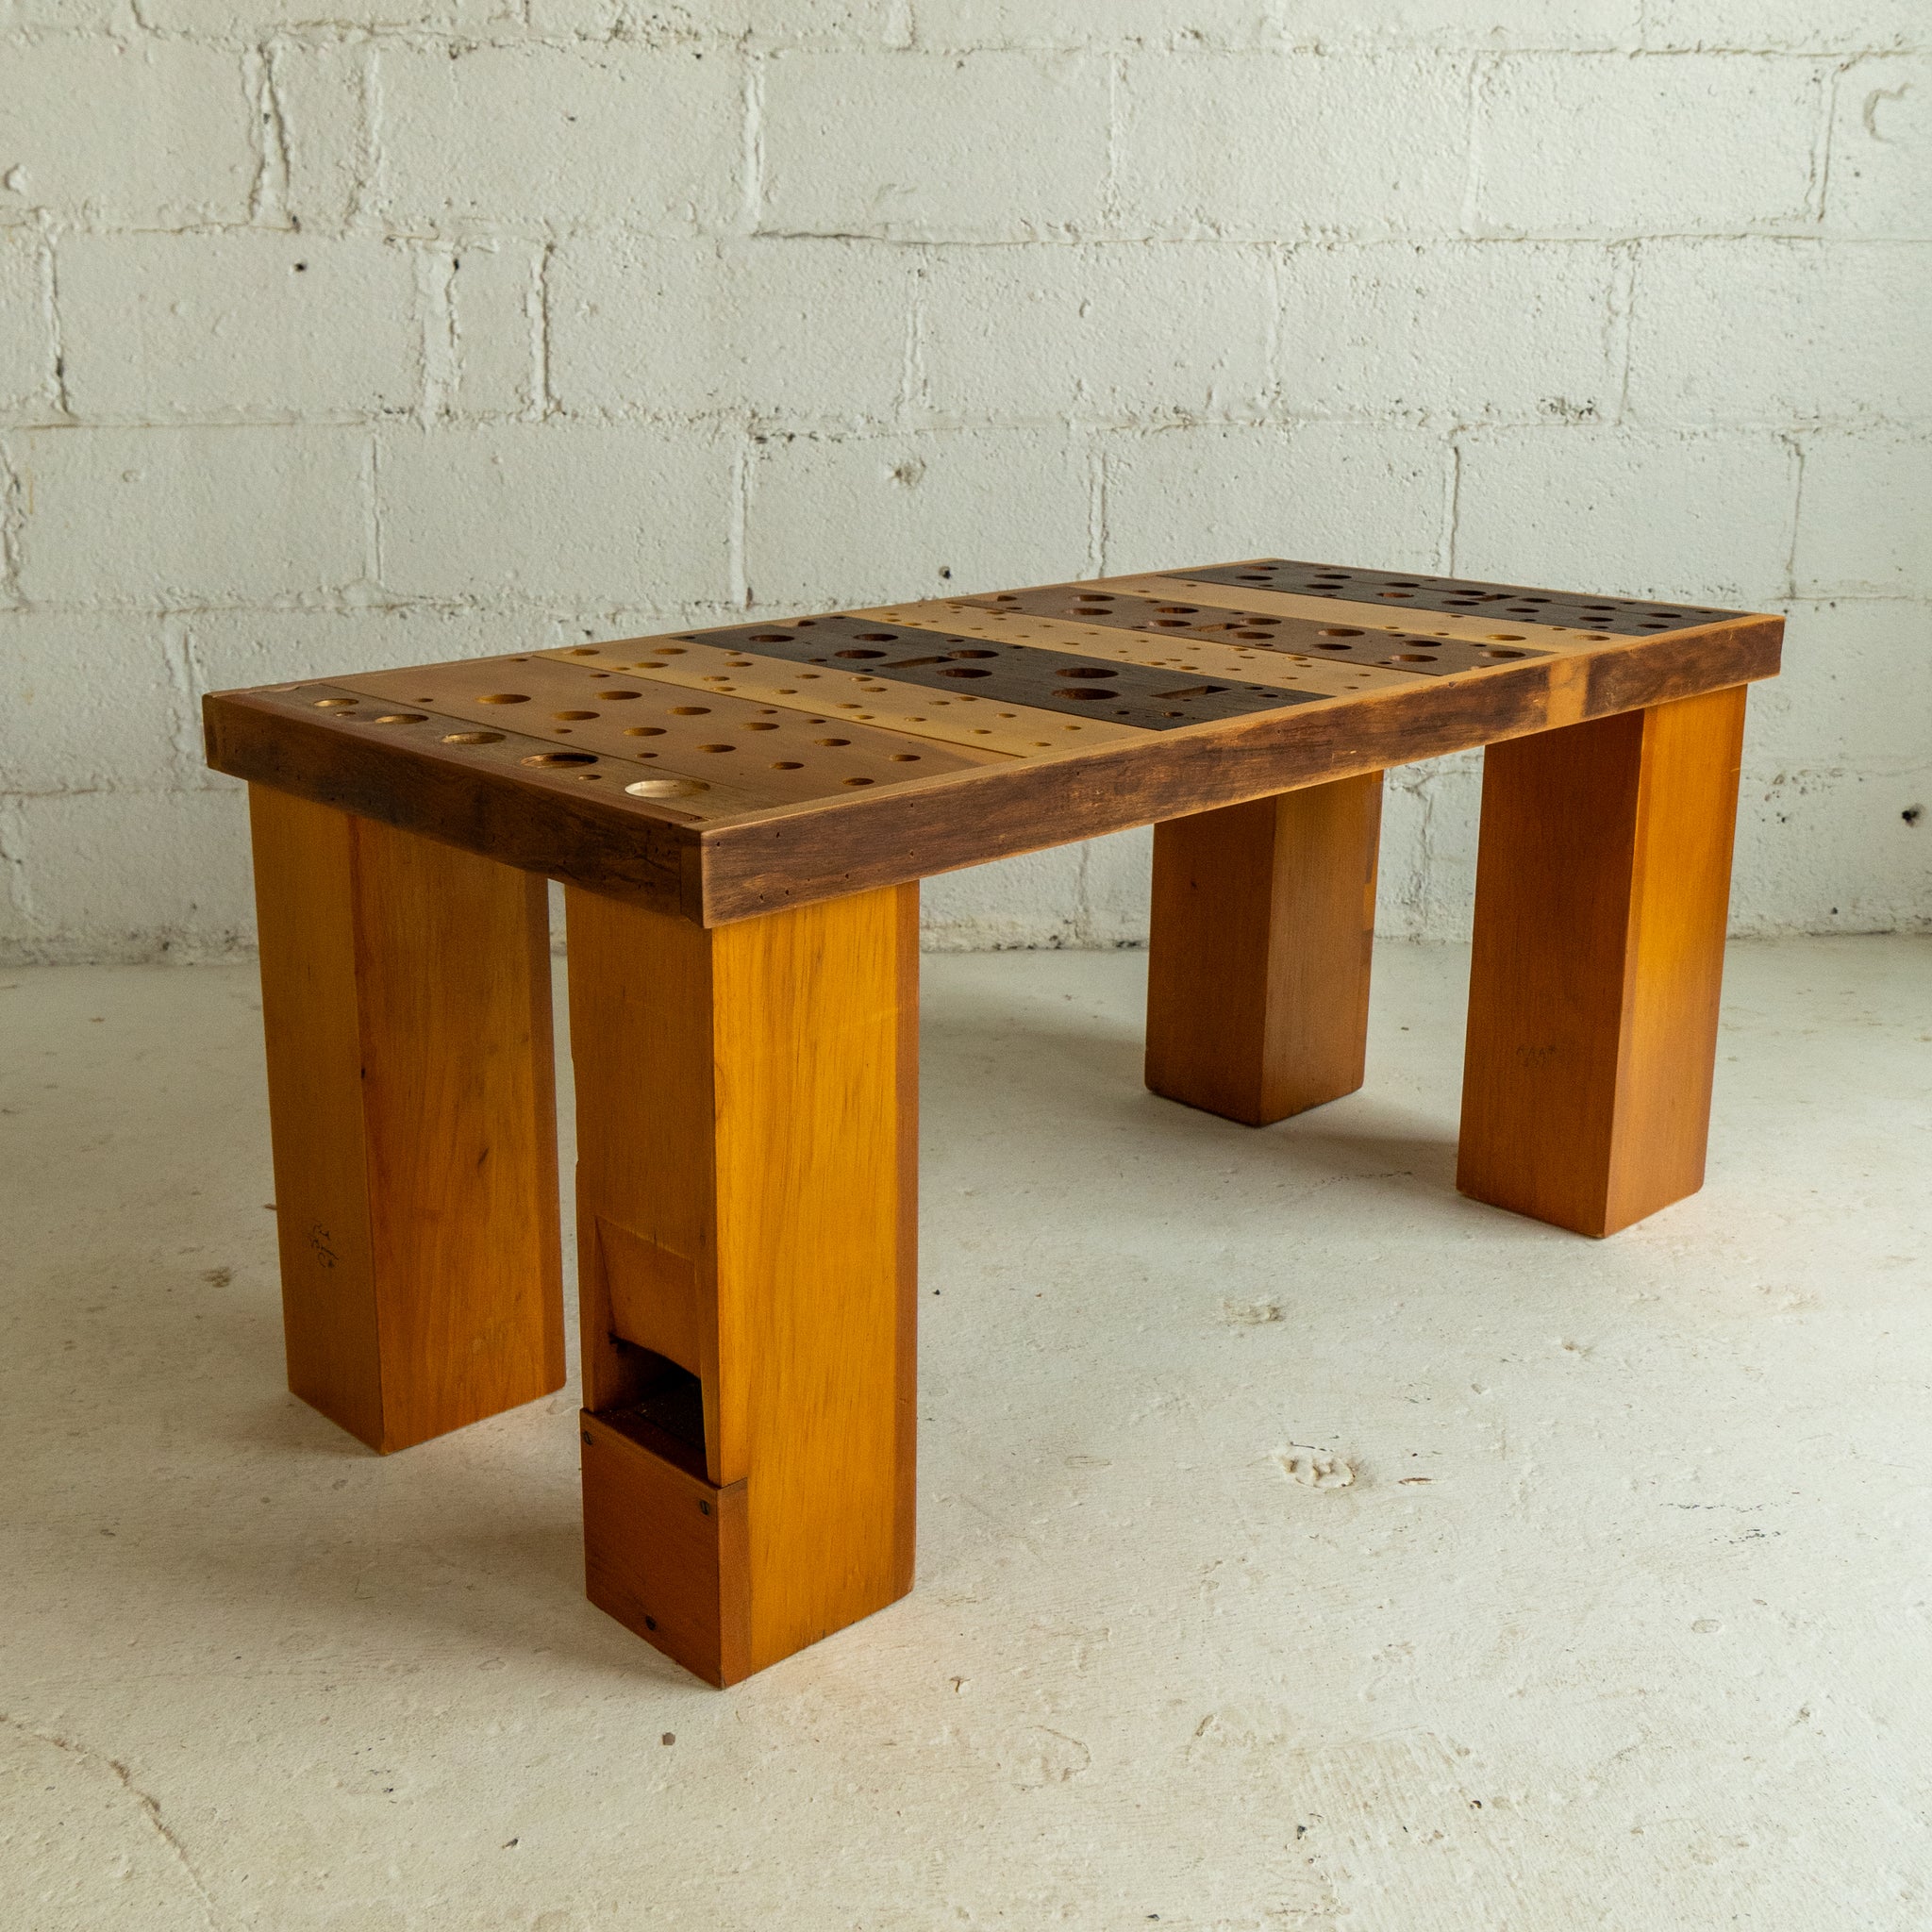 pipe organ coffee table 2 full view reclaimed wood